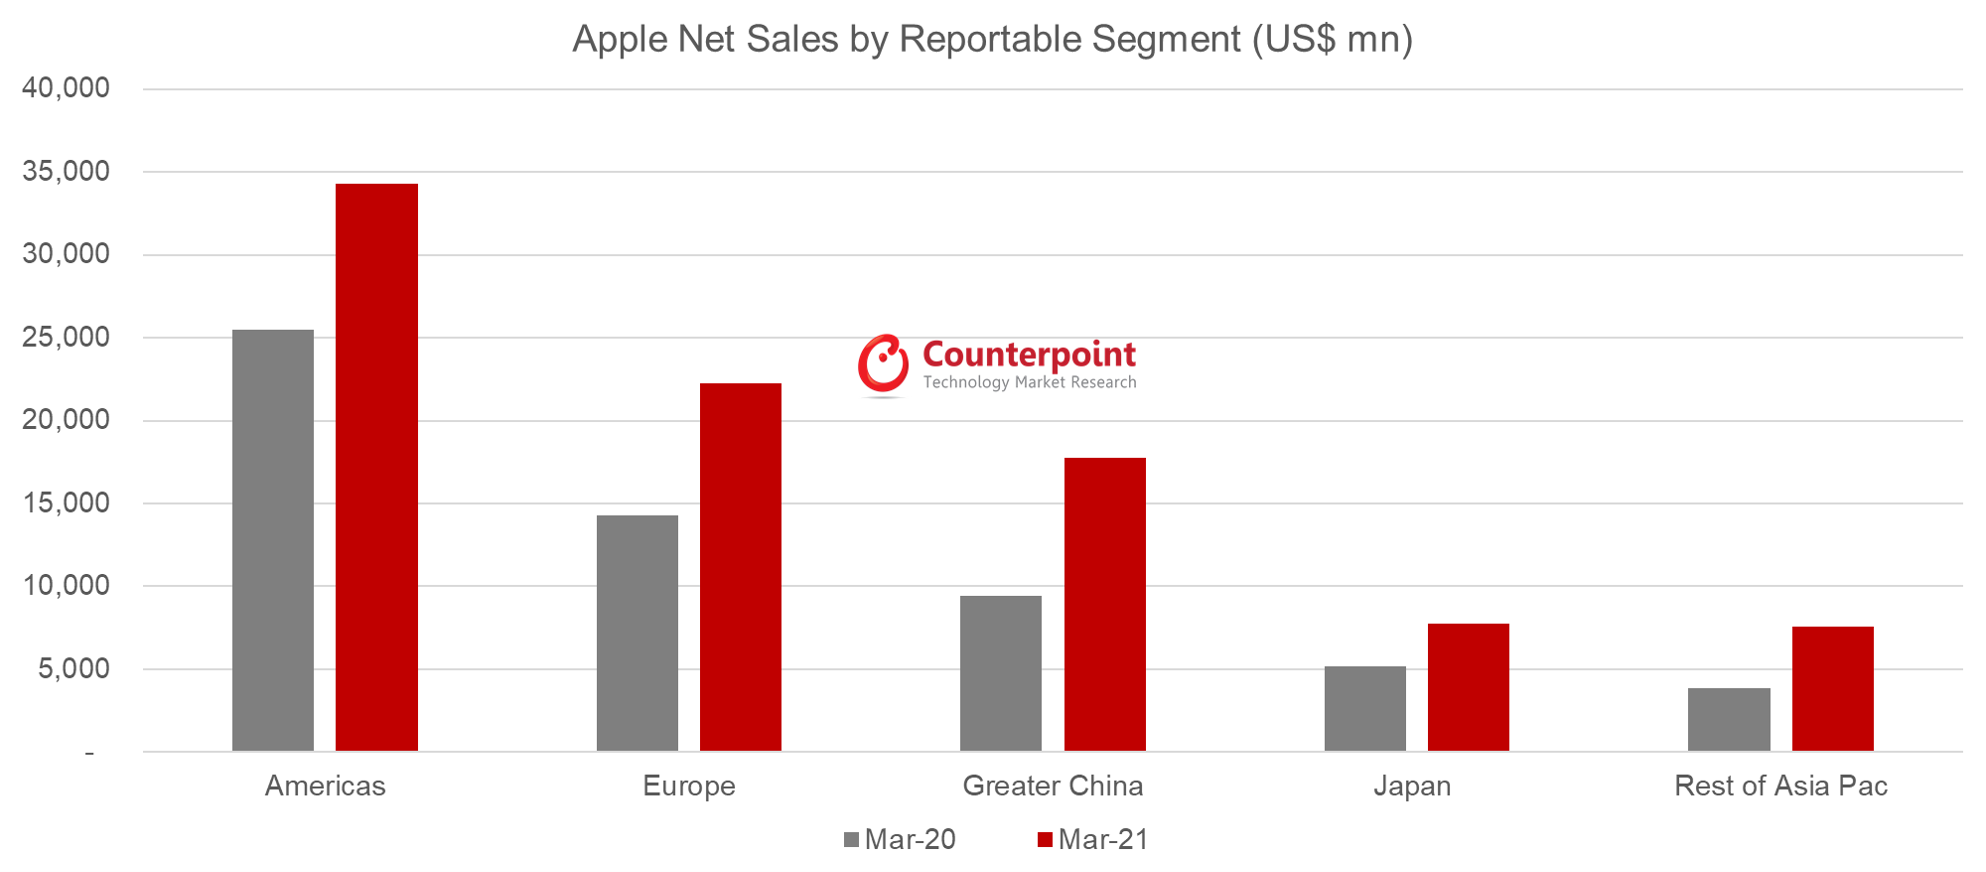 Counterpoint Research按可报告部门划分的苹果净销售额